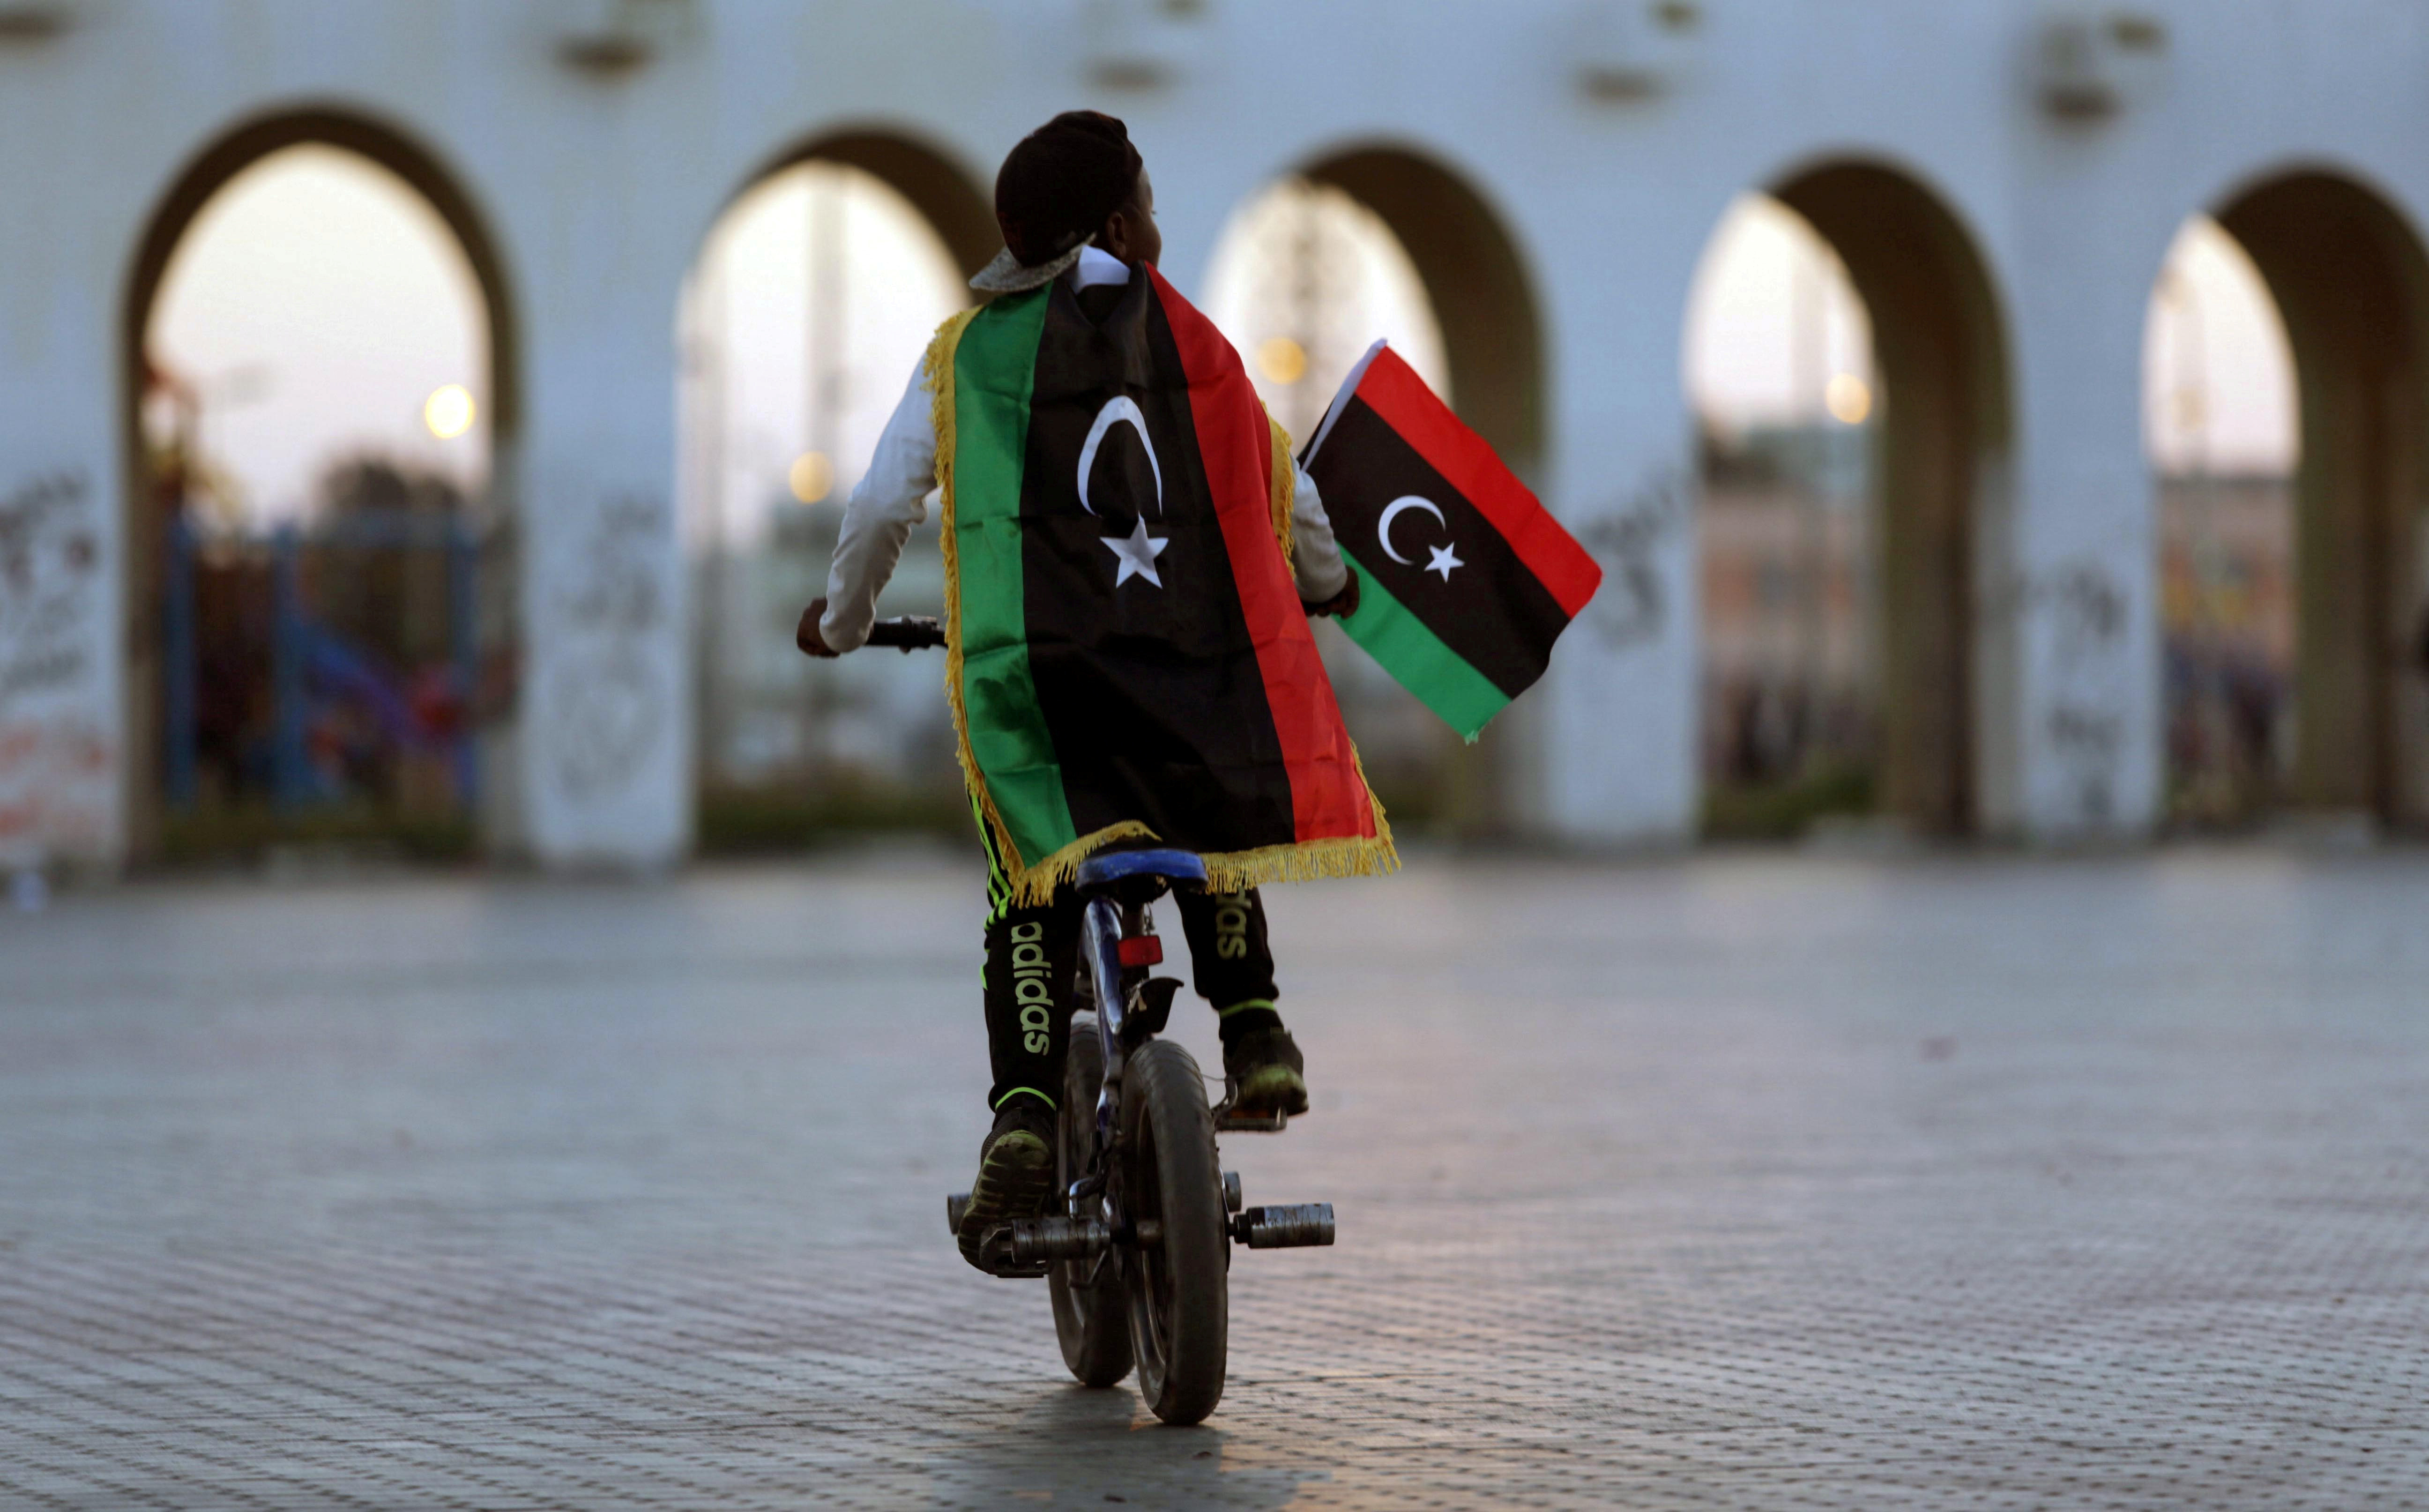 https://image.piri.net/resim/imagecrop/2020/05/27/07/04/resized_d8e49-2020-05-26t132344z_1517159389_rc2dwg9zgkbf_rtrmadp_3_libya-security-usa.jpg